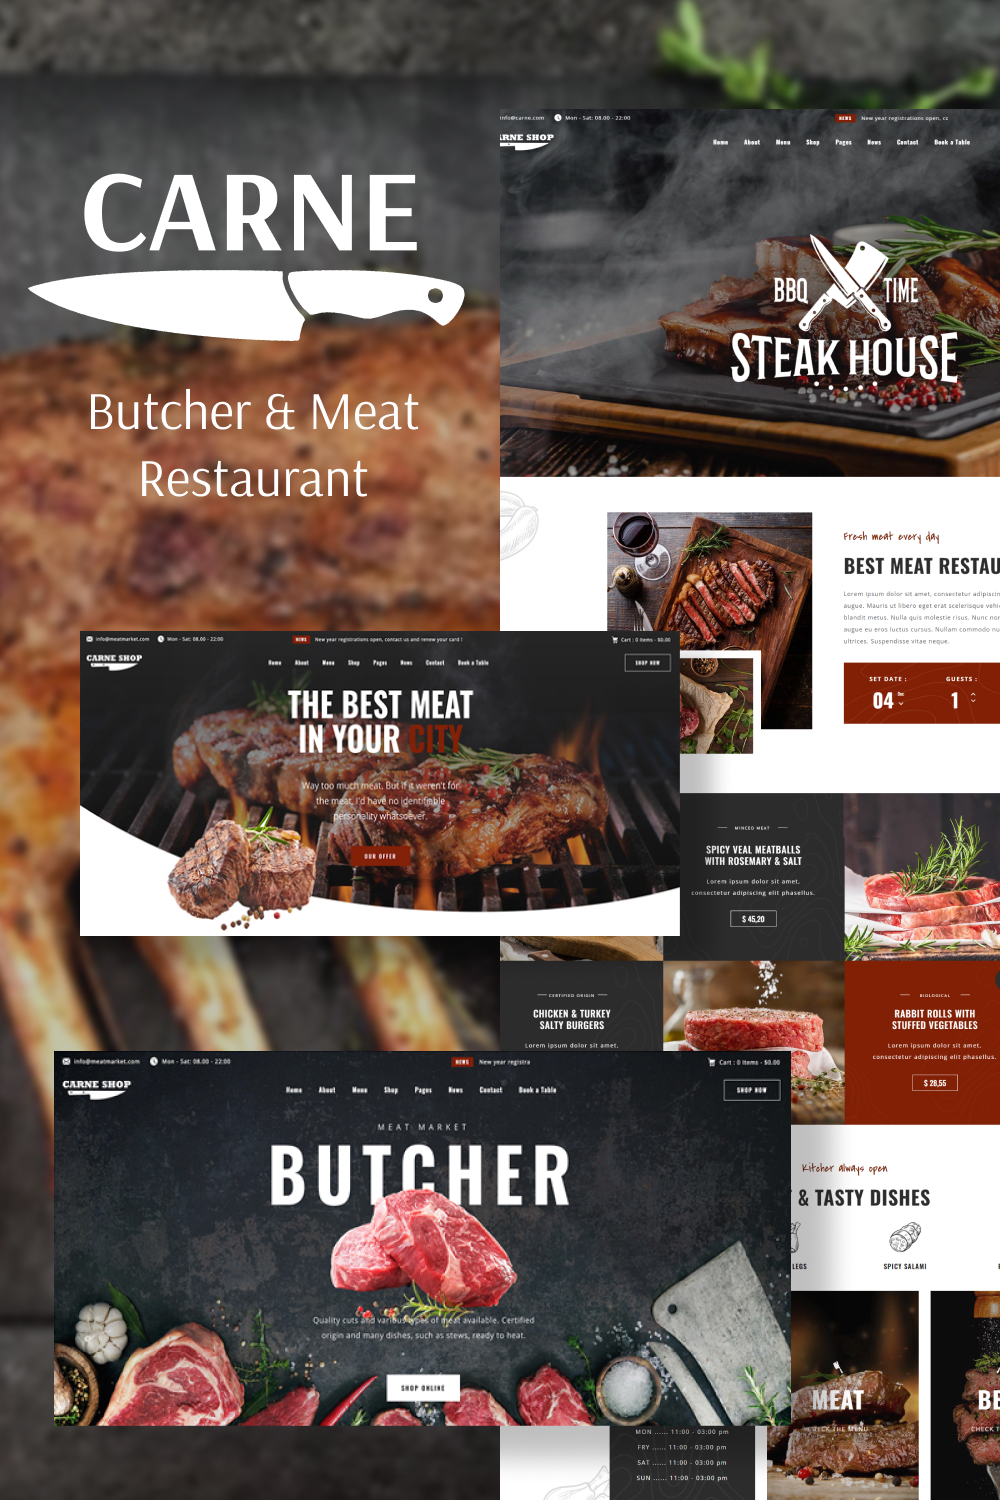 Carne butcher meat restaurant of pinterest.